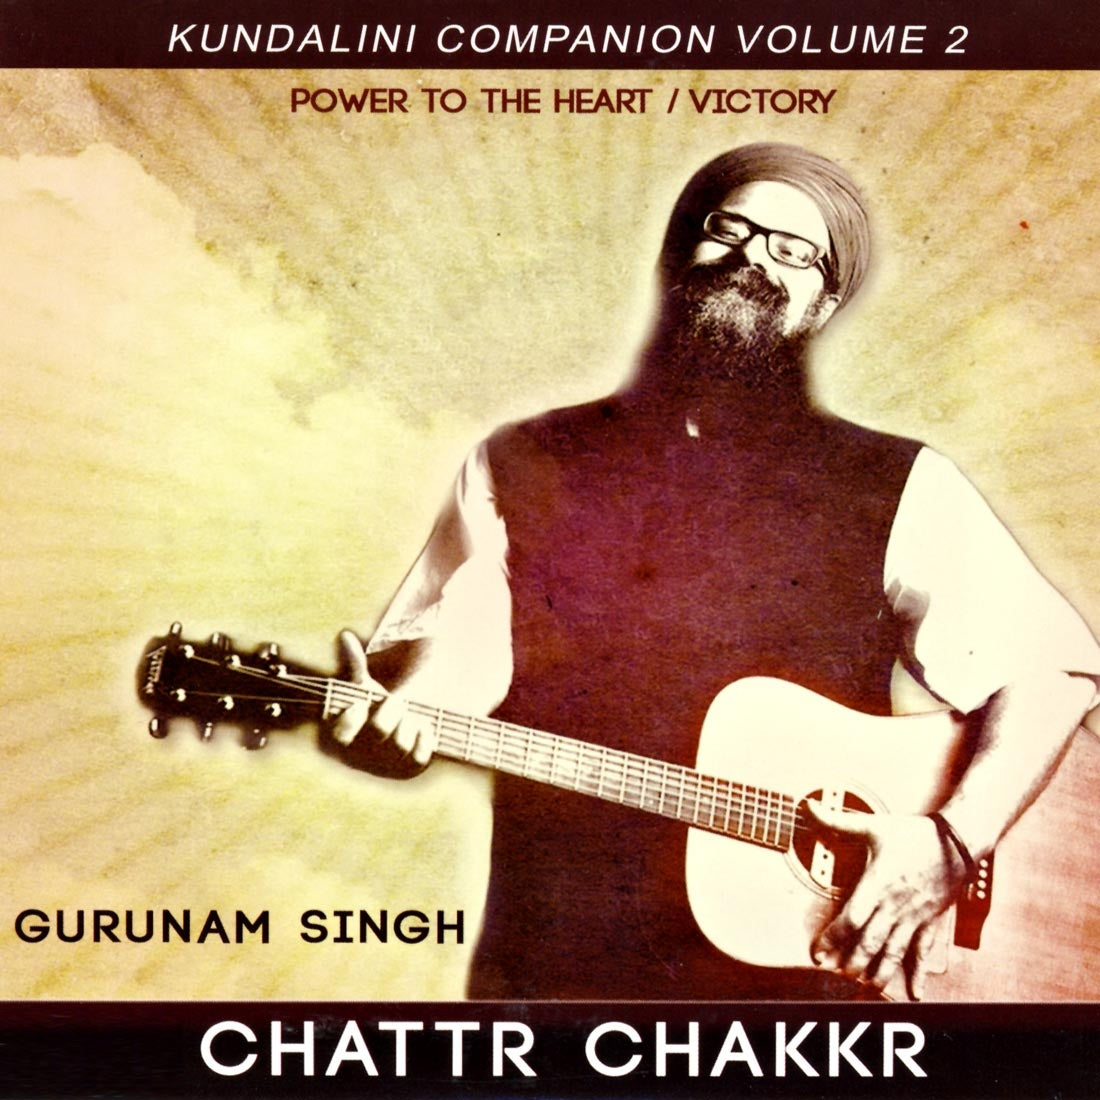 Chattr Chakkr - Gurunam Singh complete